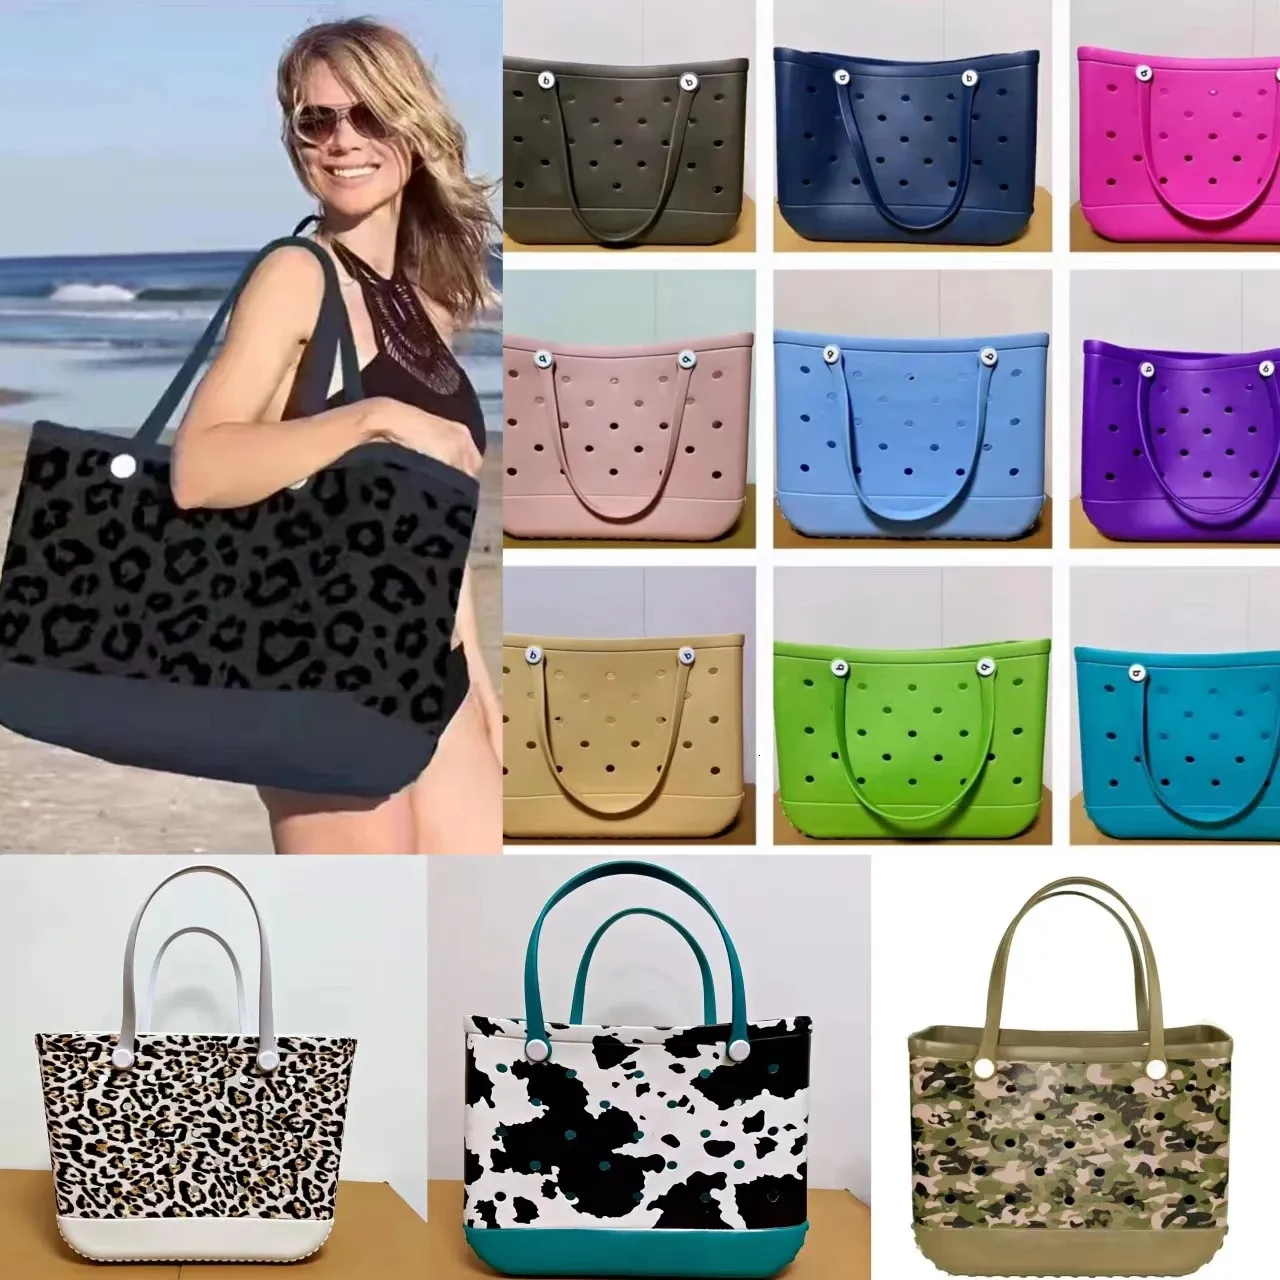 Bogge Bags Extras Boggs Beach Bag Bag Bag Bag Bag Bag Bag Rubber مع ثقوب BOG XL مصمم حقيبة يد 240328